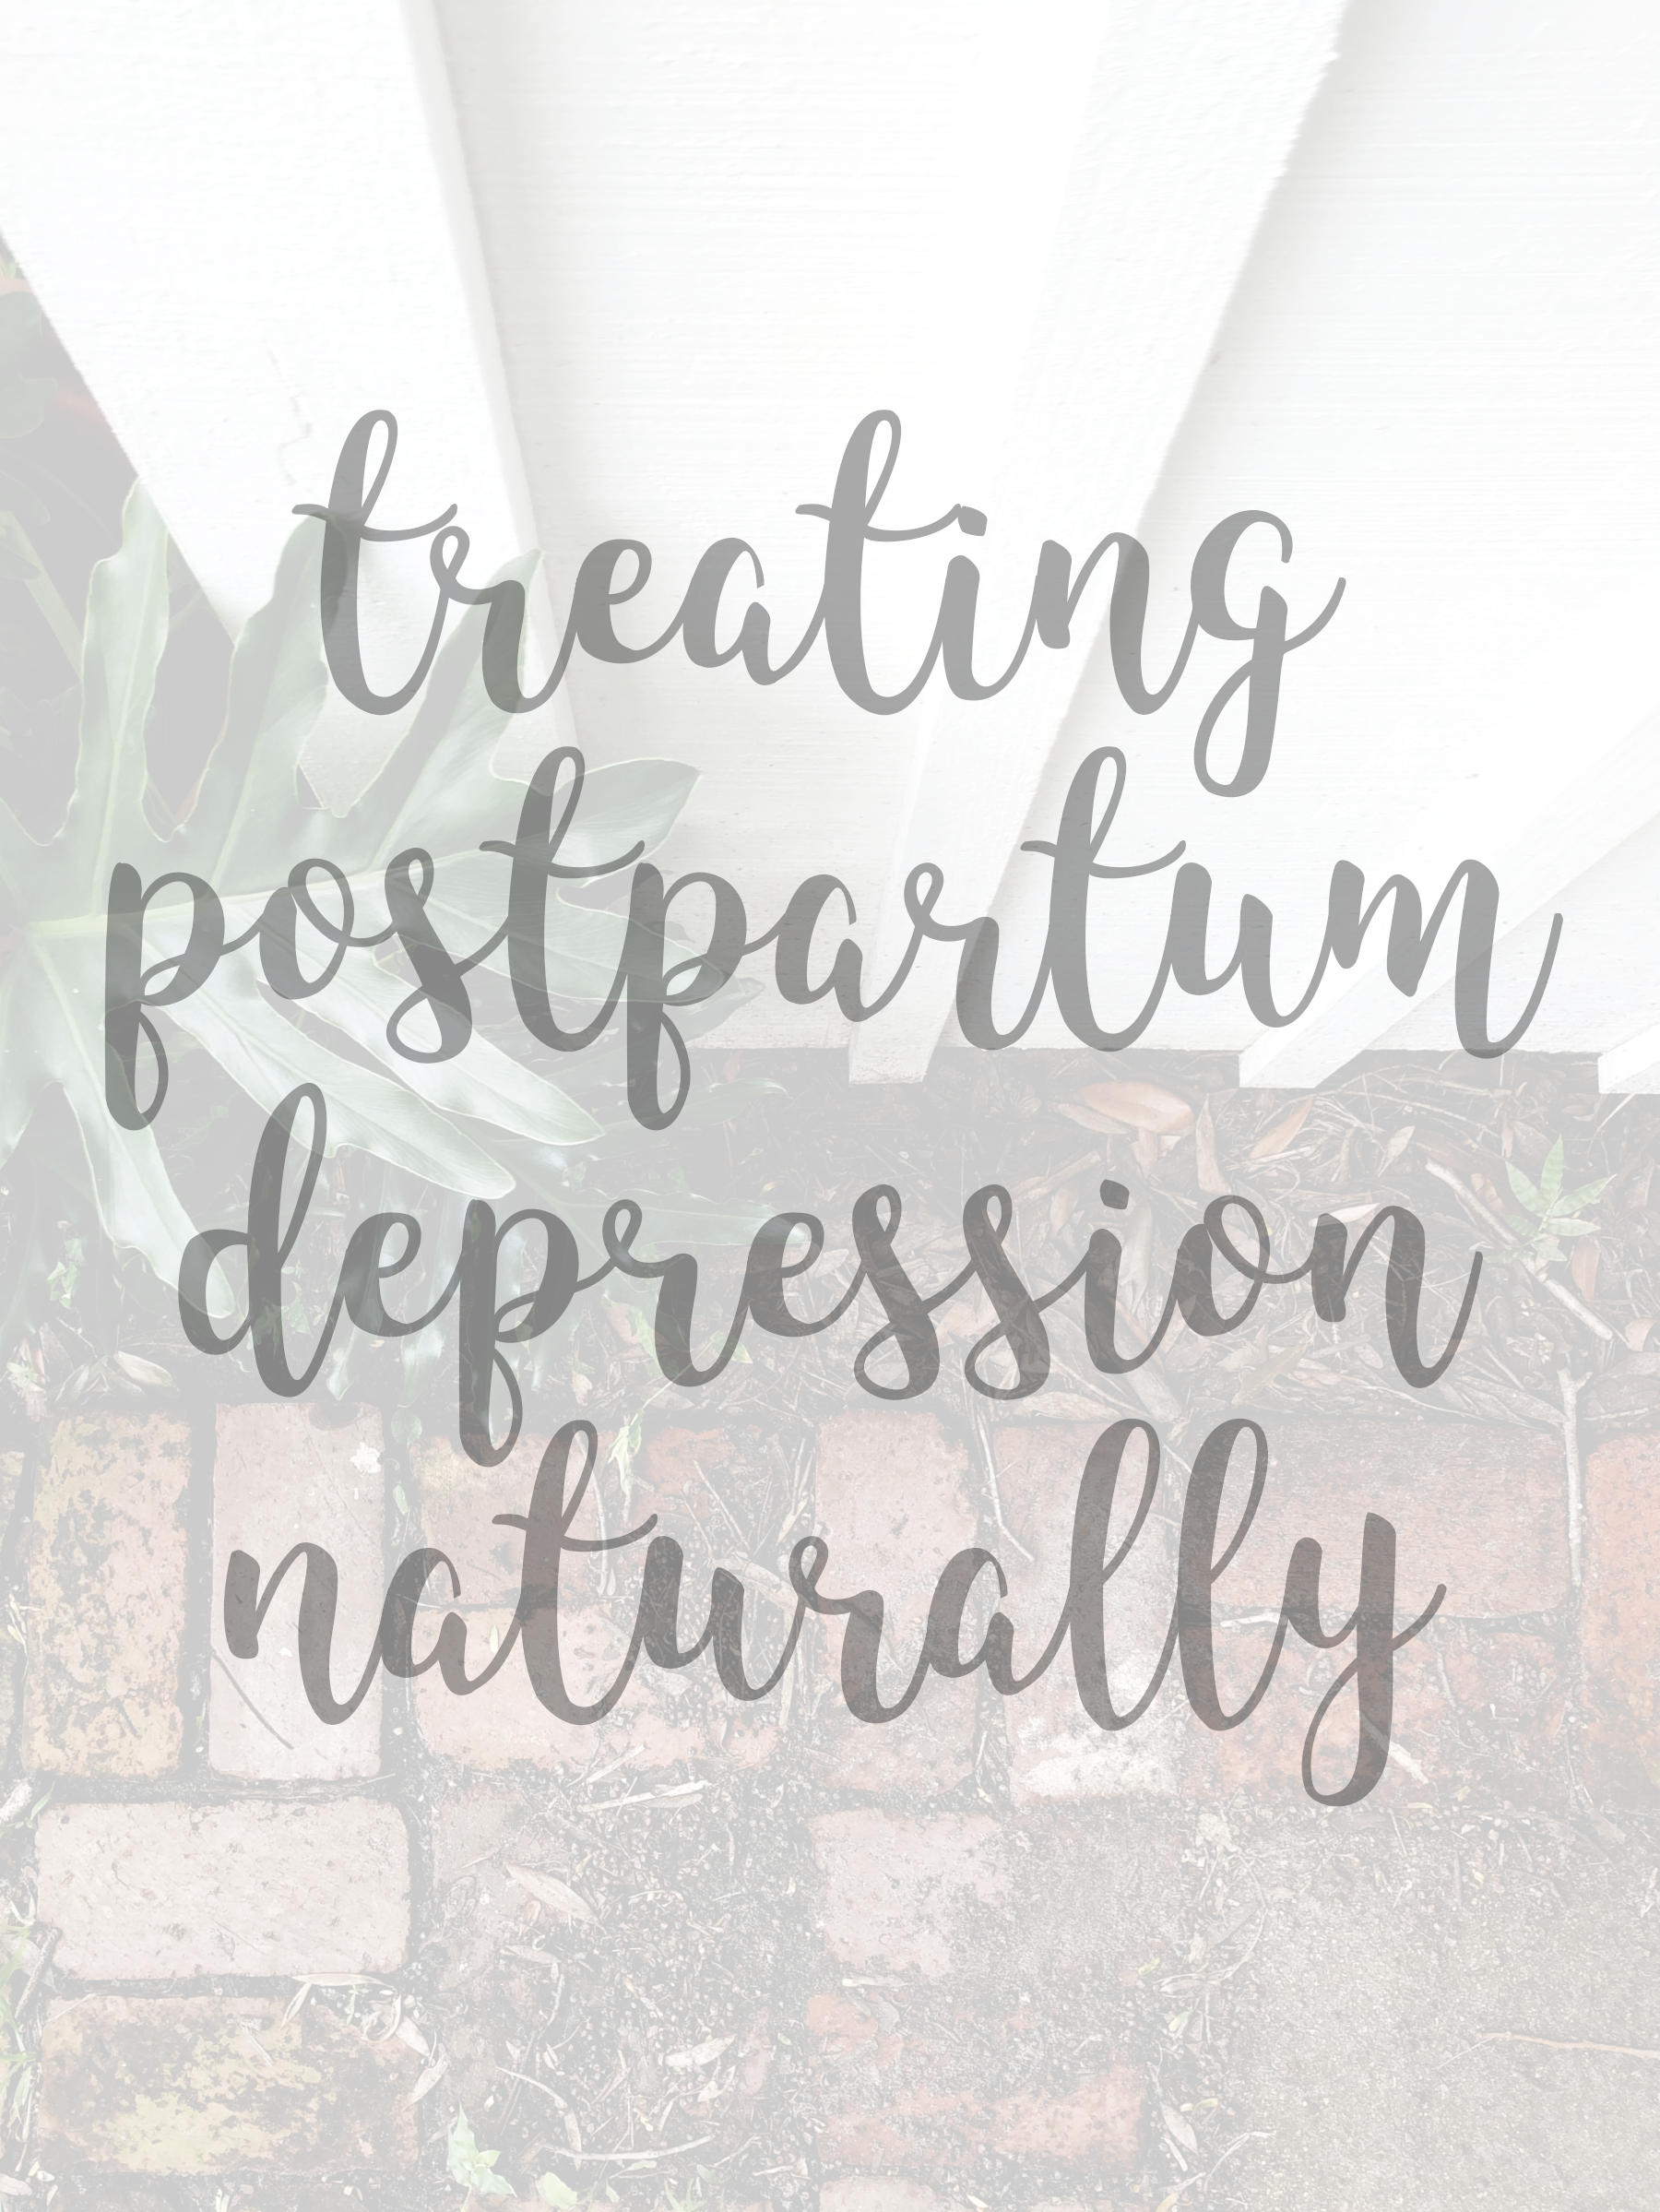 Treat Postpartum Depression Naturally